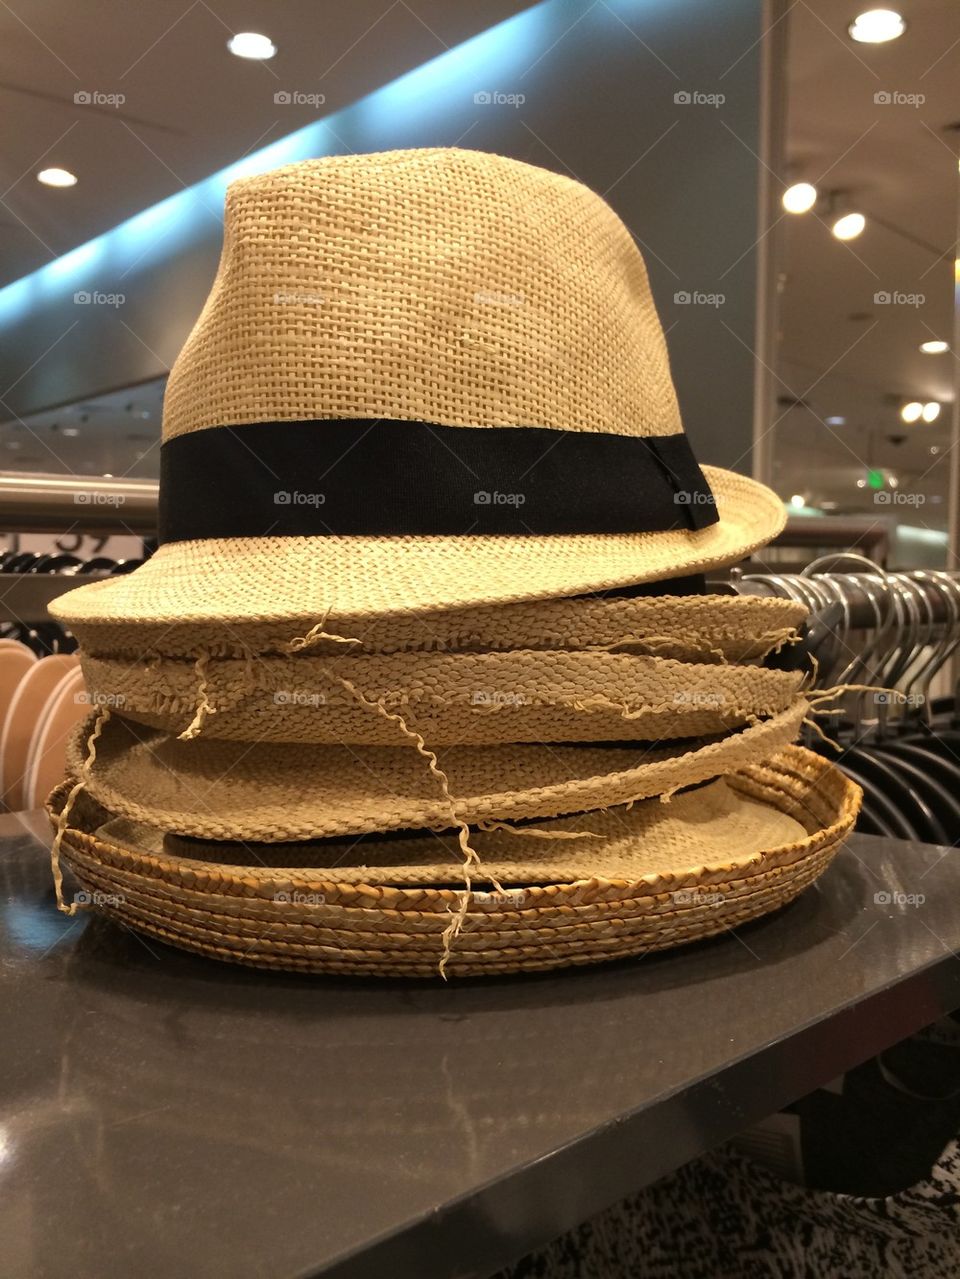 Pile of sun hats